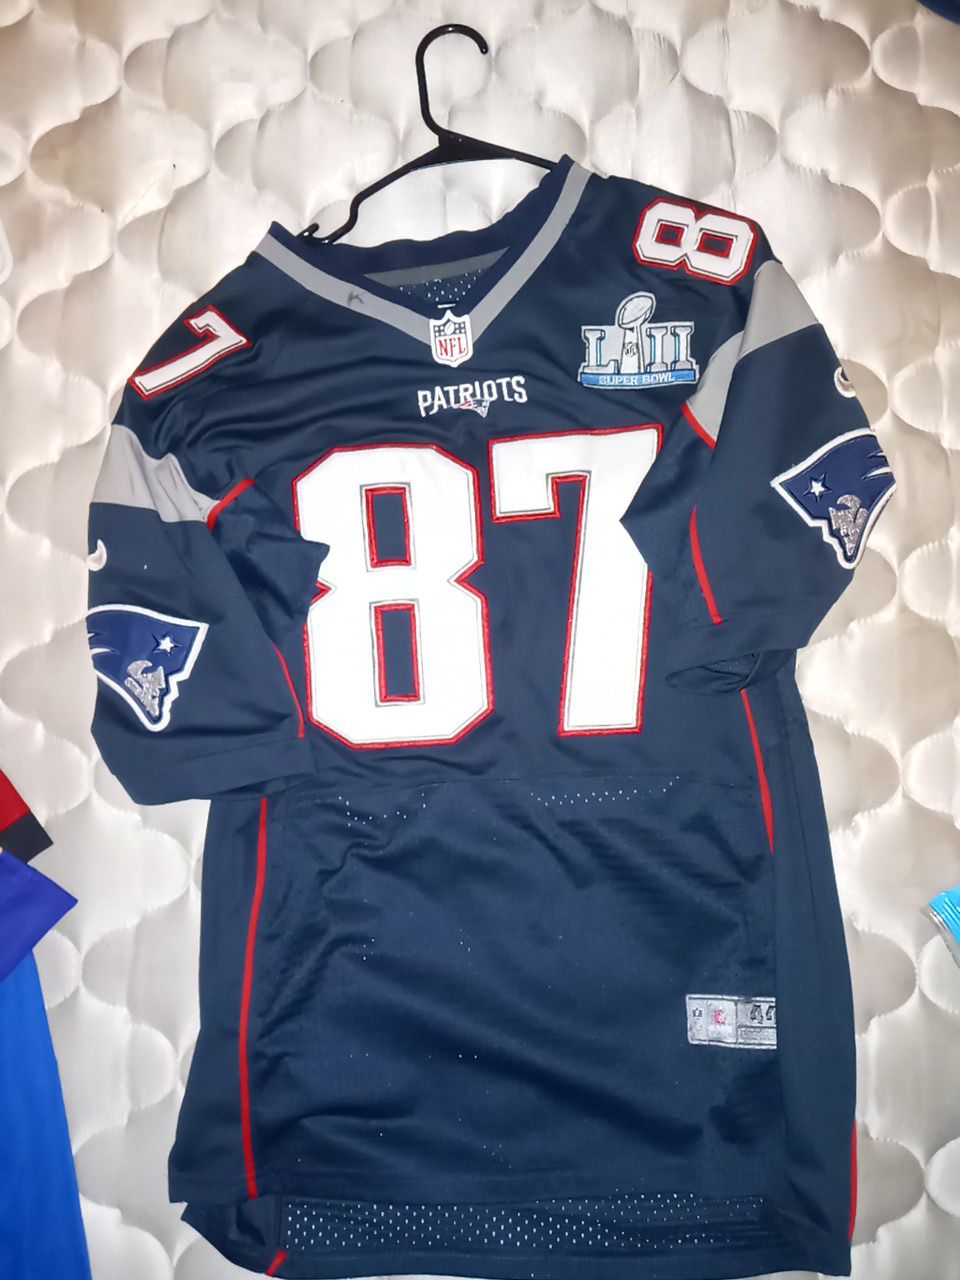 A Patriots Gronkowski football jersey